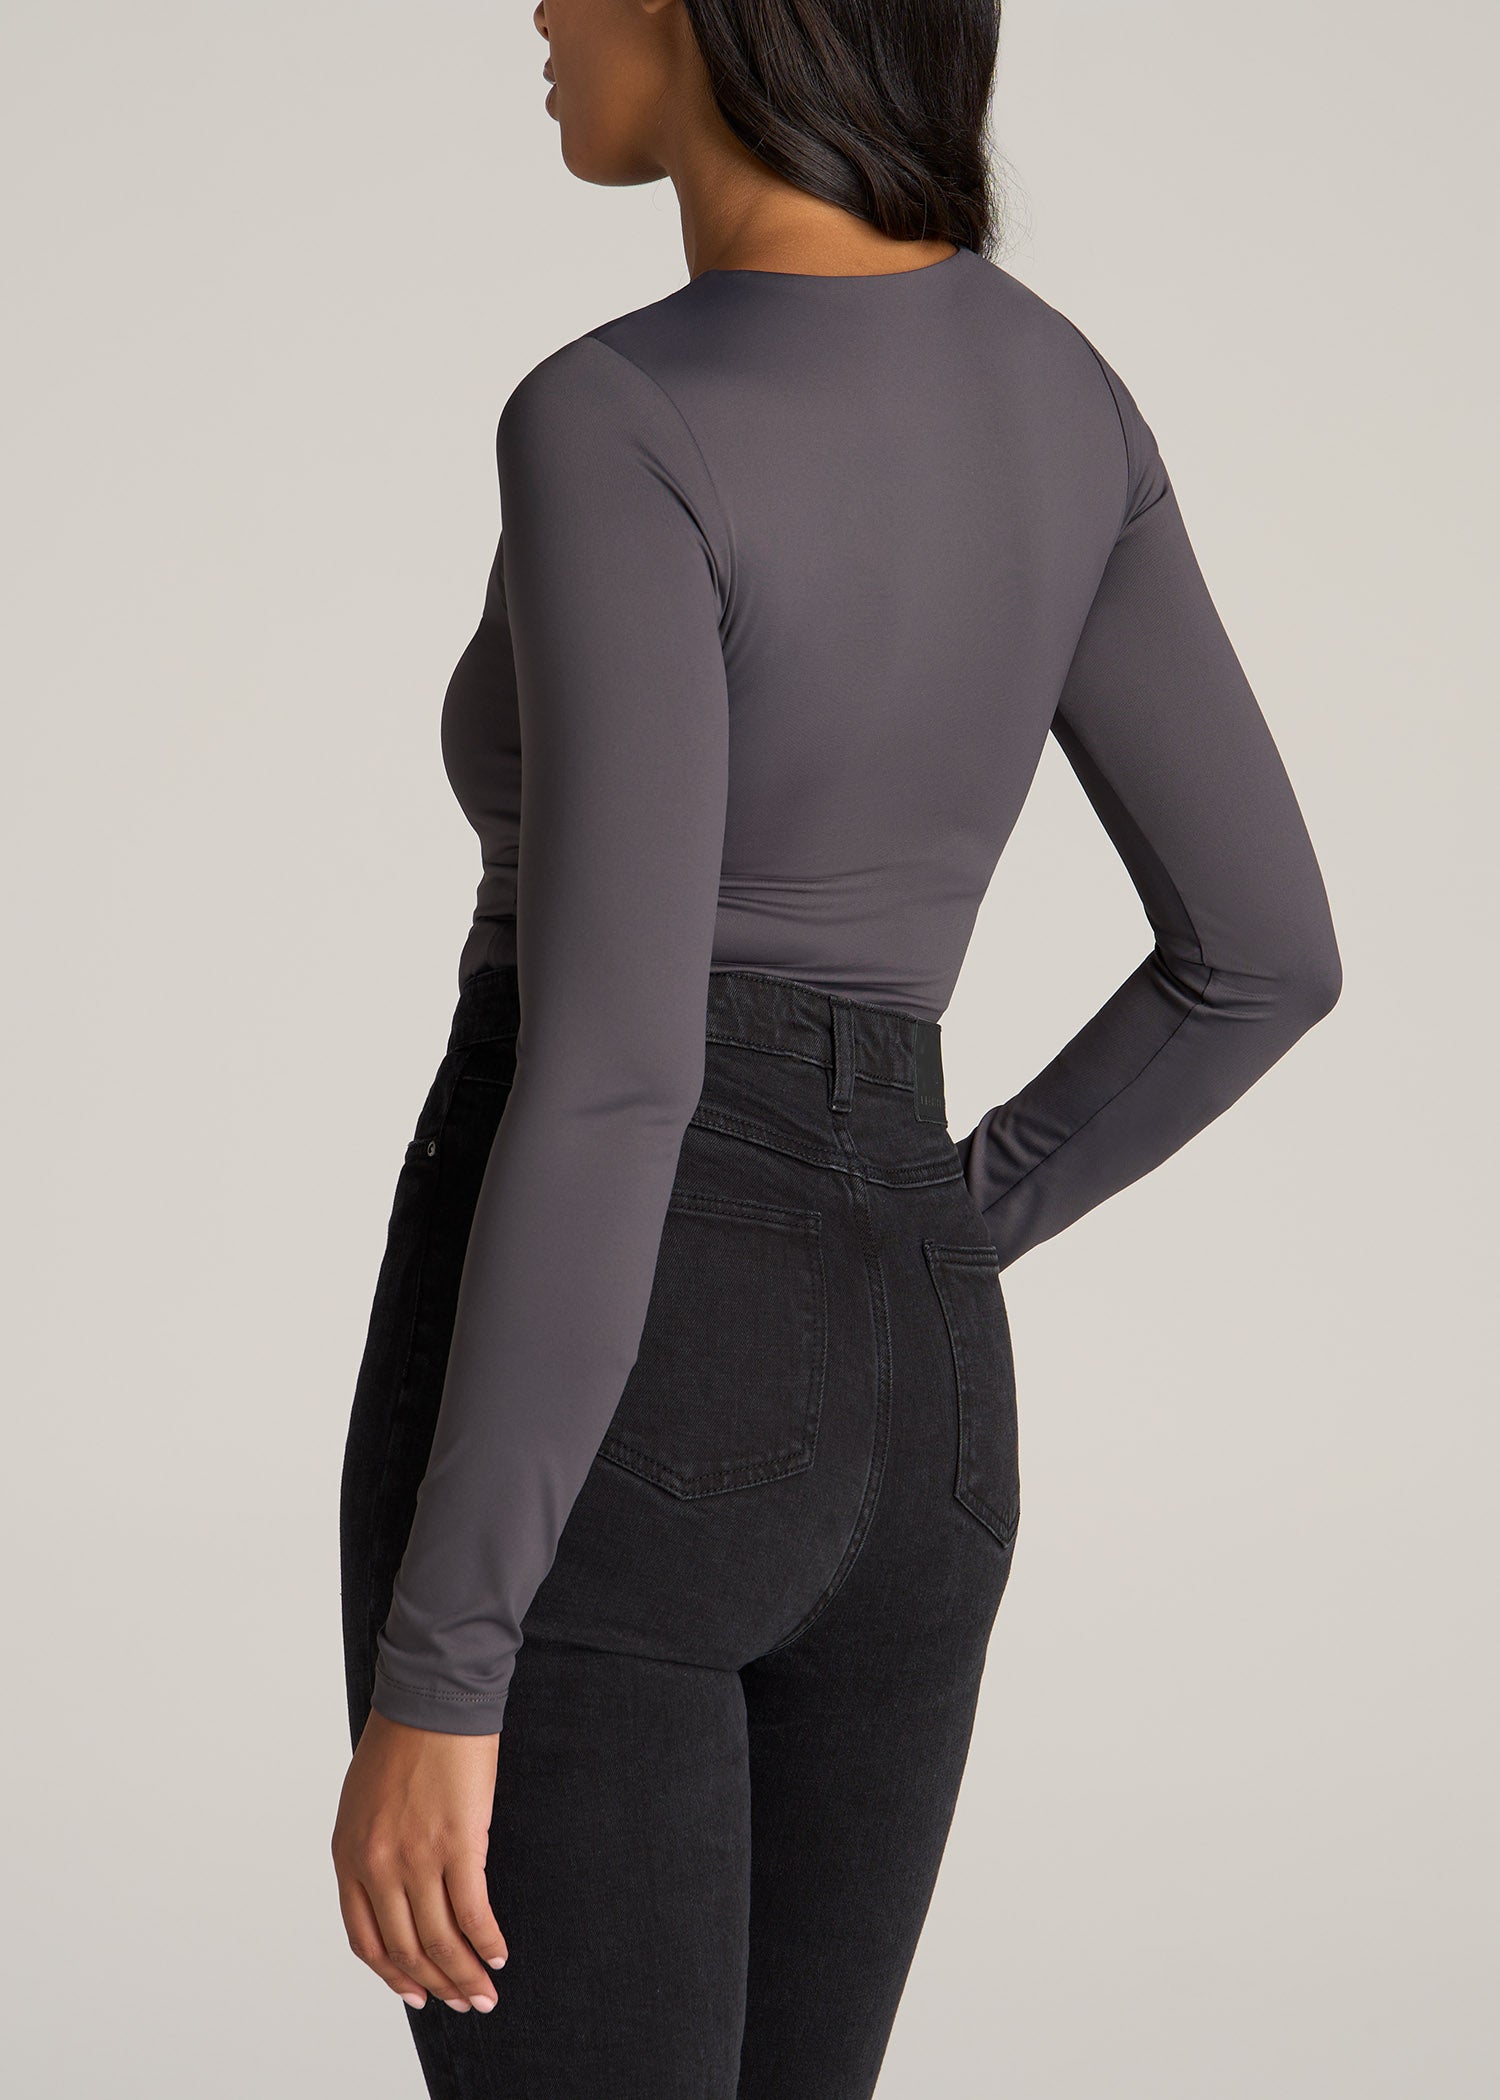 Long Sleeve Bodysuit for Tall Women in Dark Ash